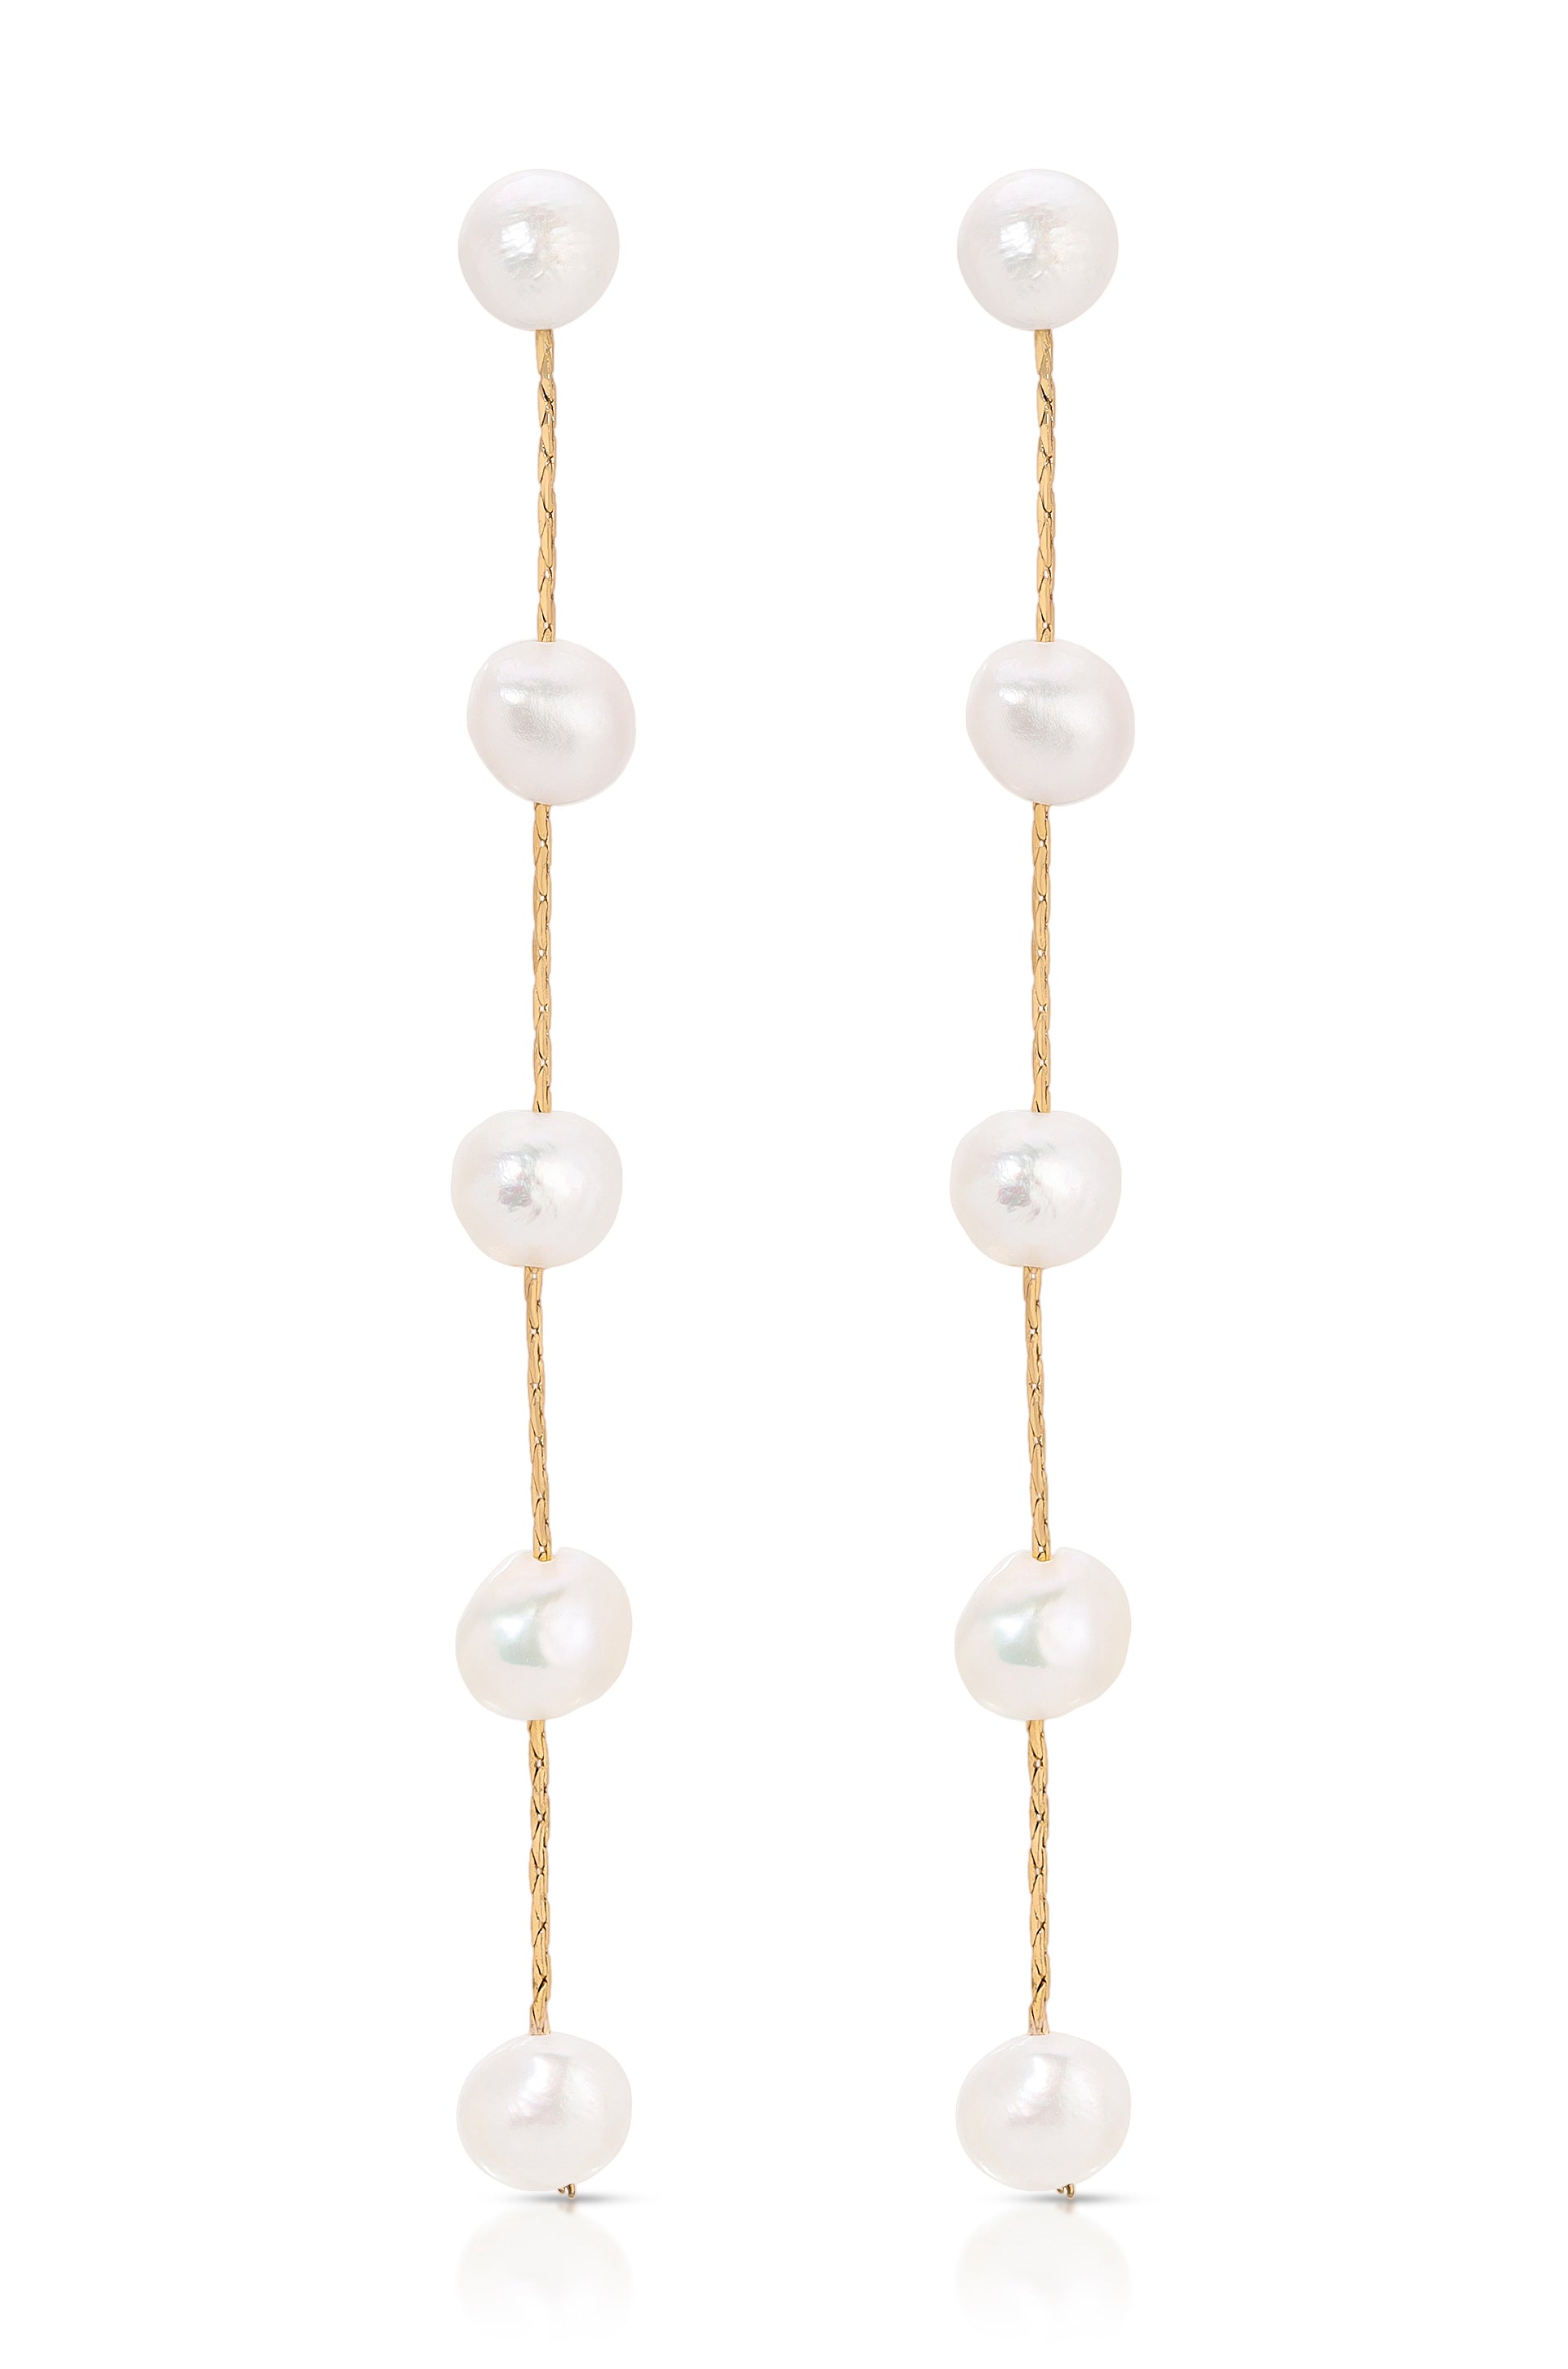 Buy Flower Zirconia White Pearl Earrings for Women Online at Ajnaa Jewels |  449199